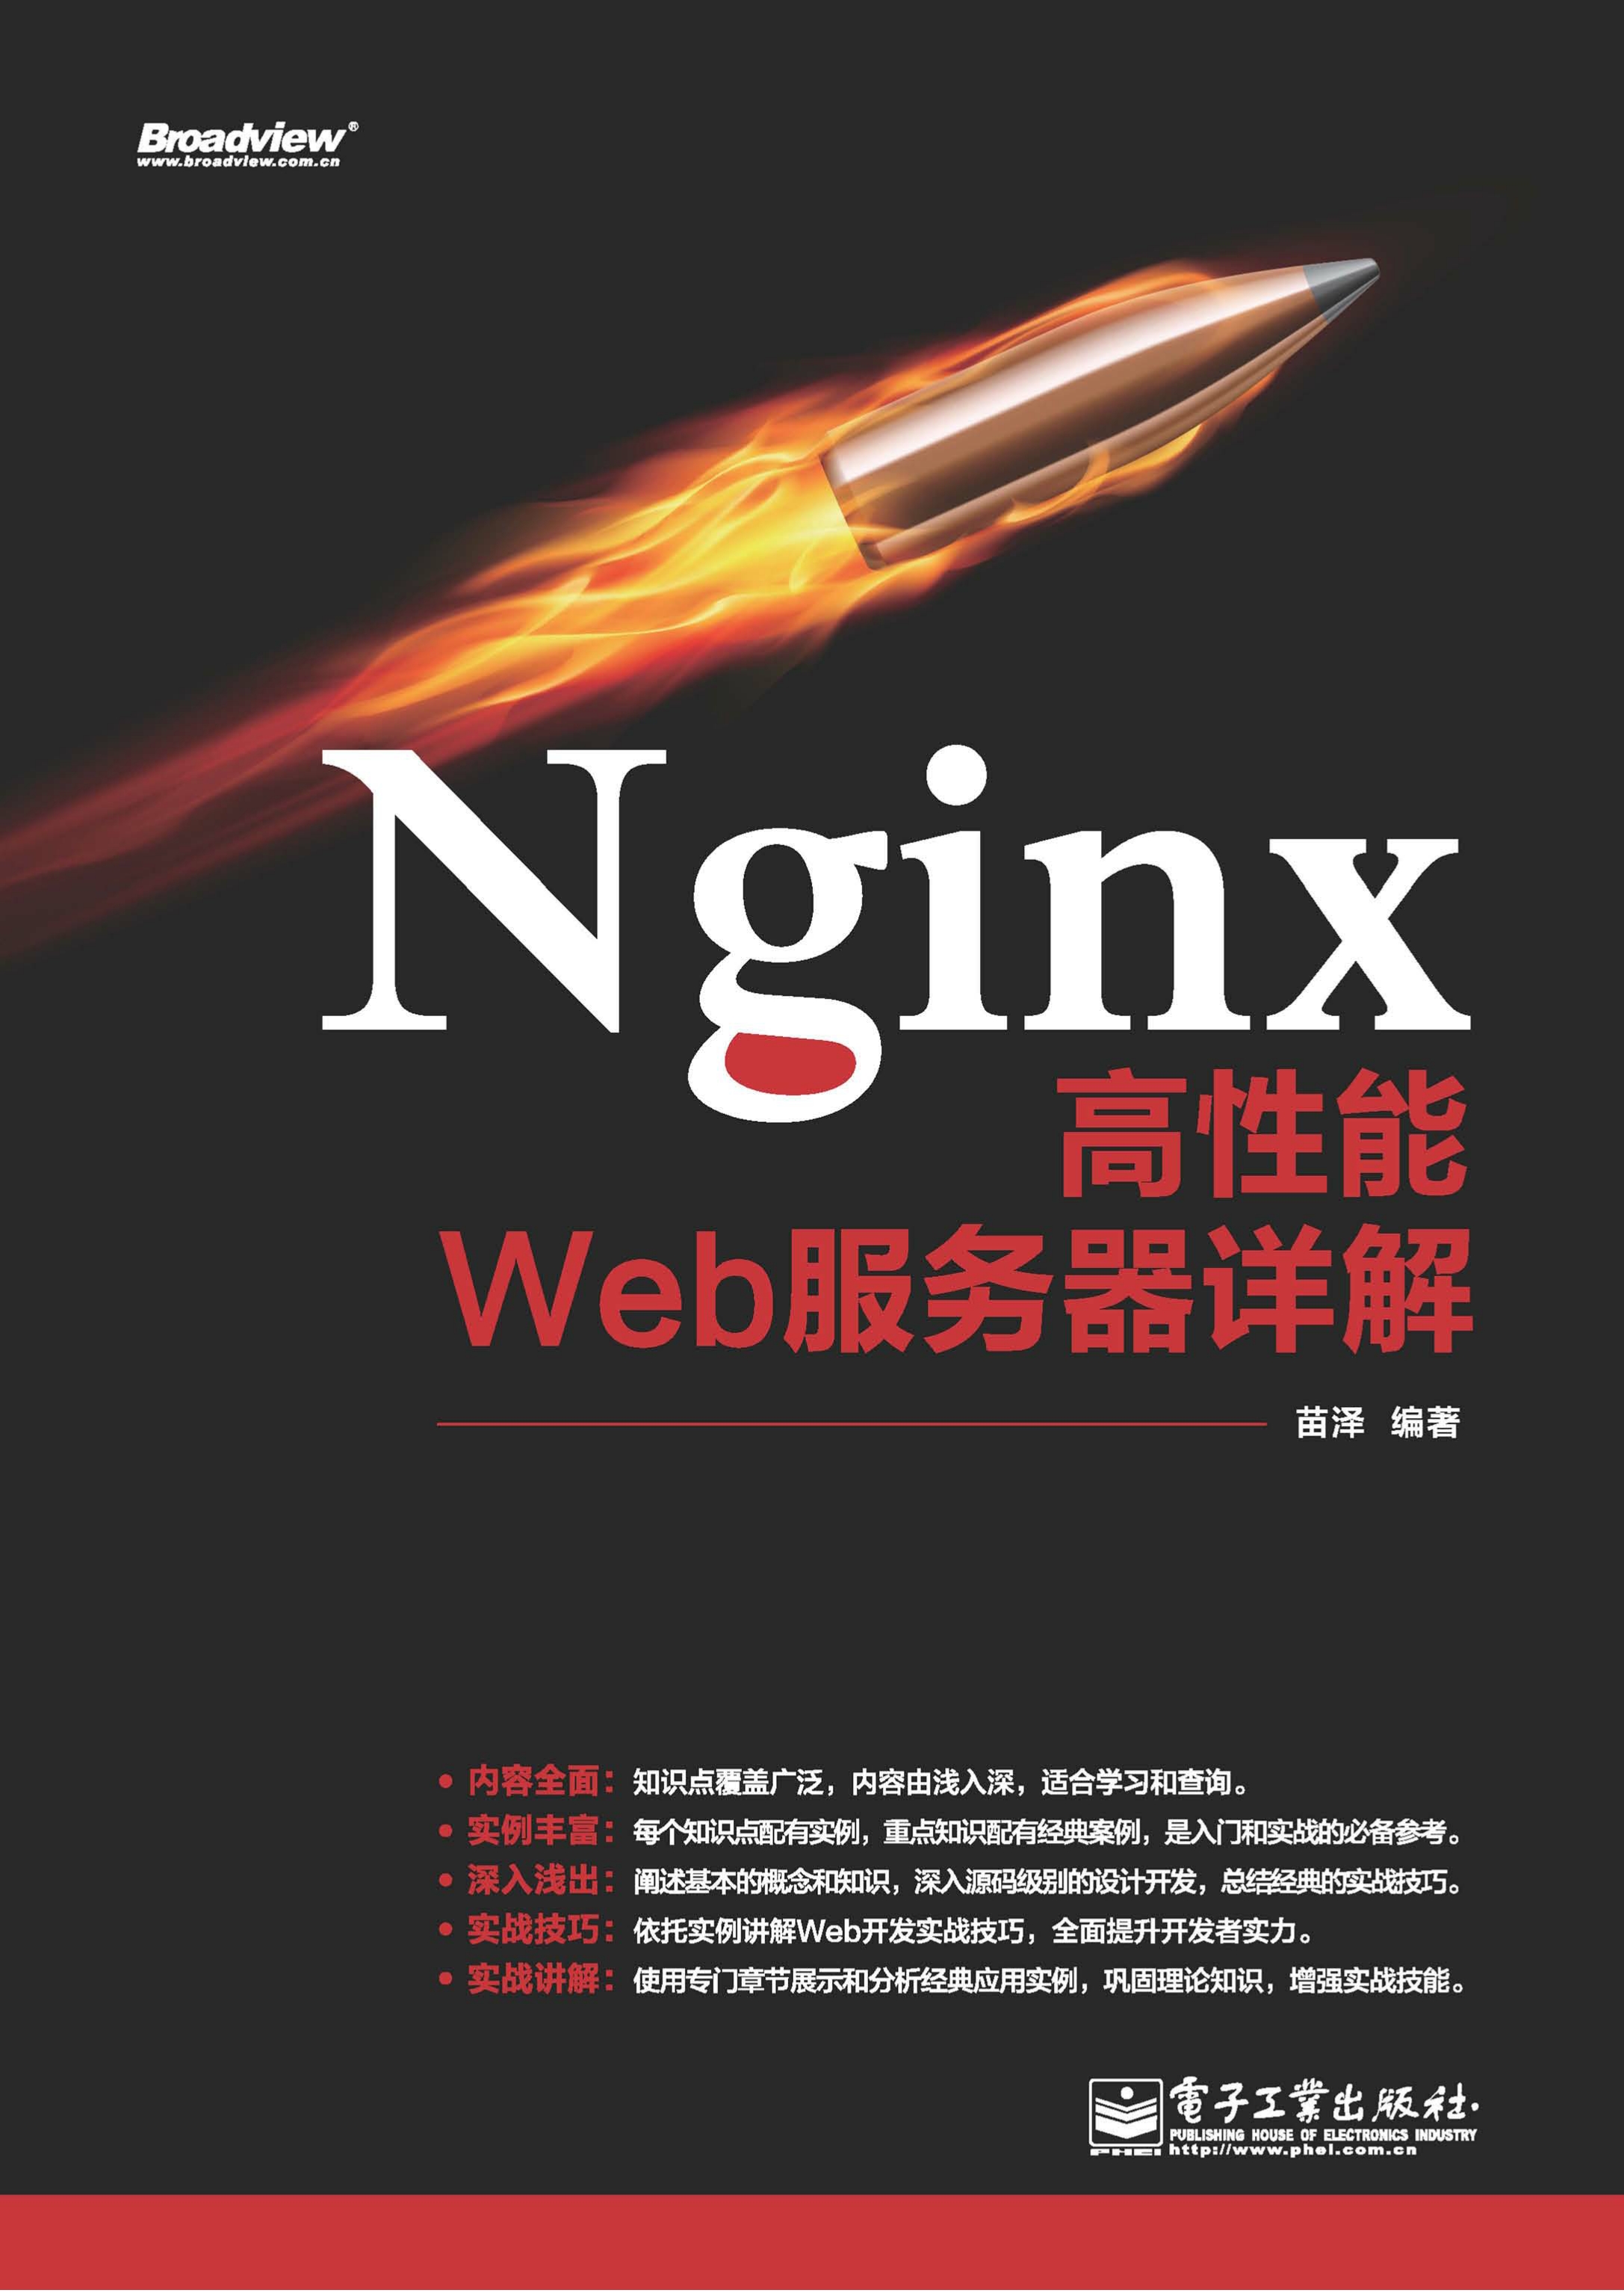 Nginx高性能Web服务器详解